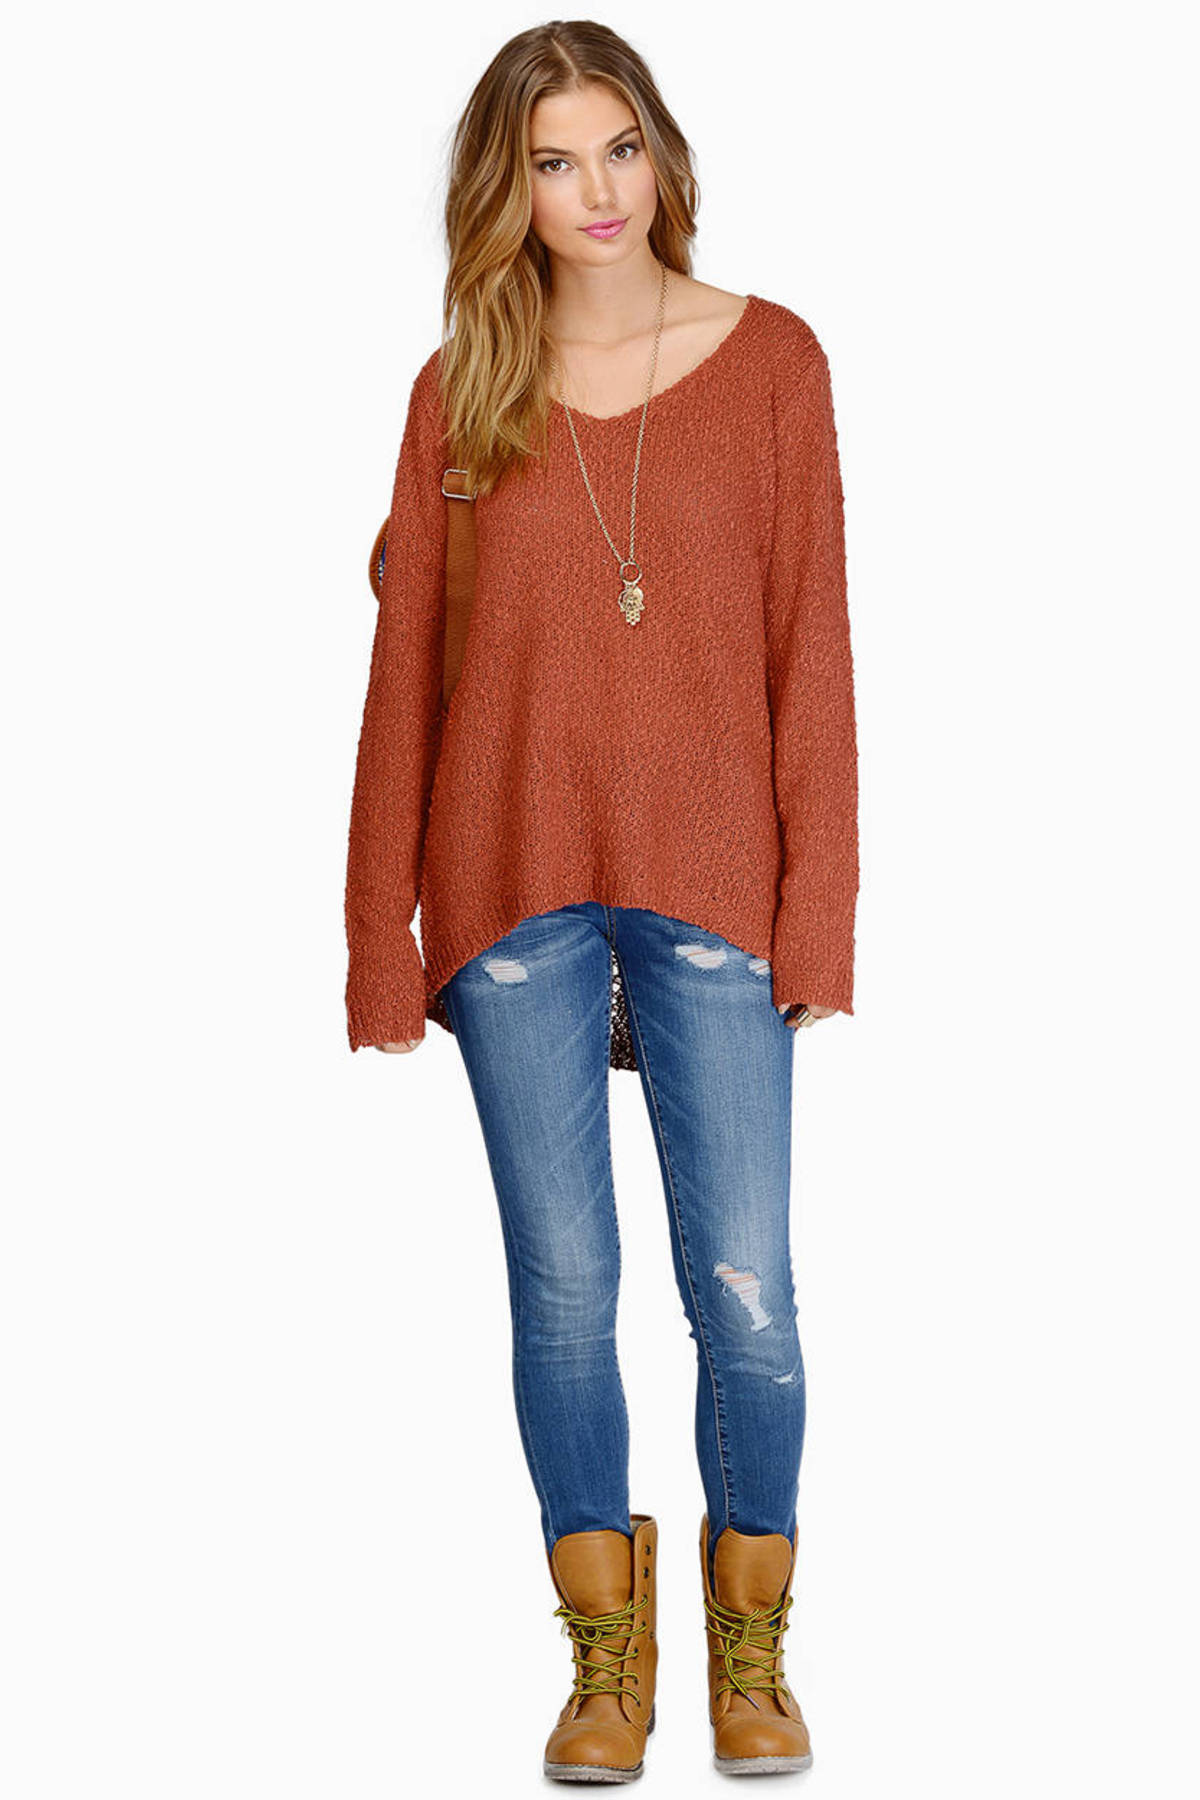 Love Someone Sweater in Rust - $48 | Tobi US